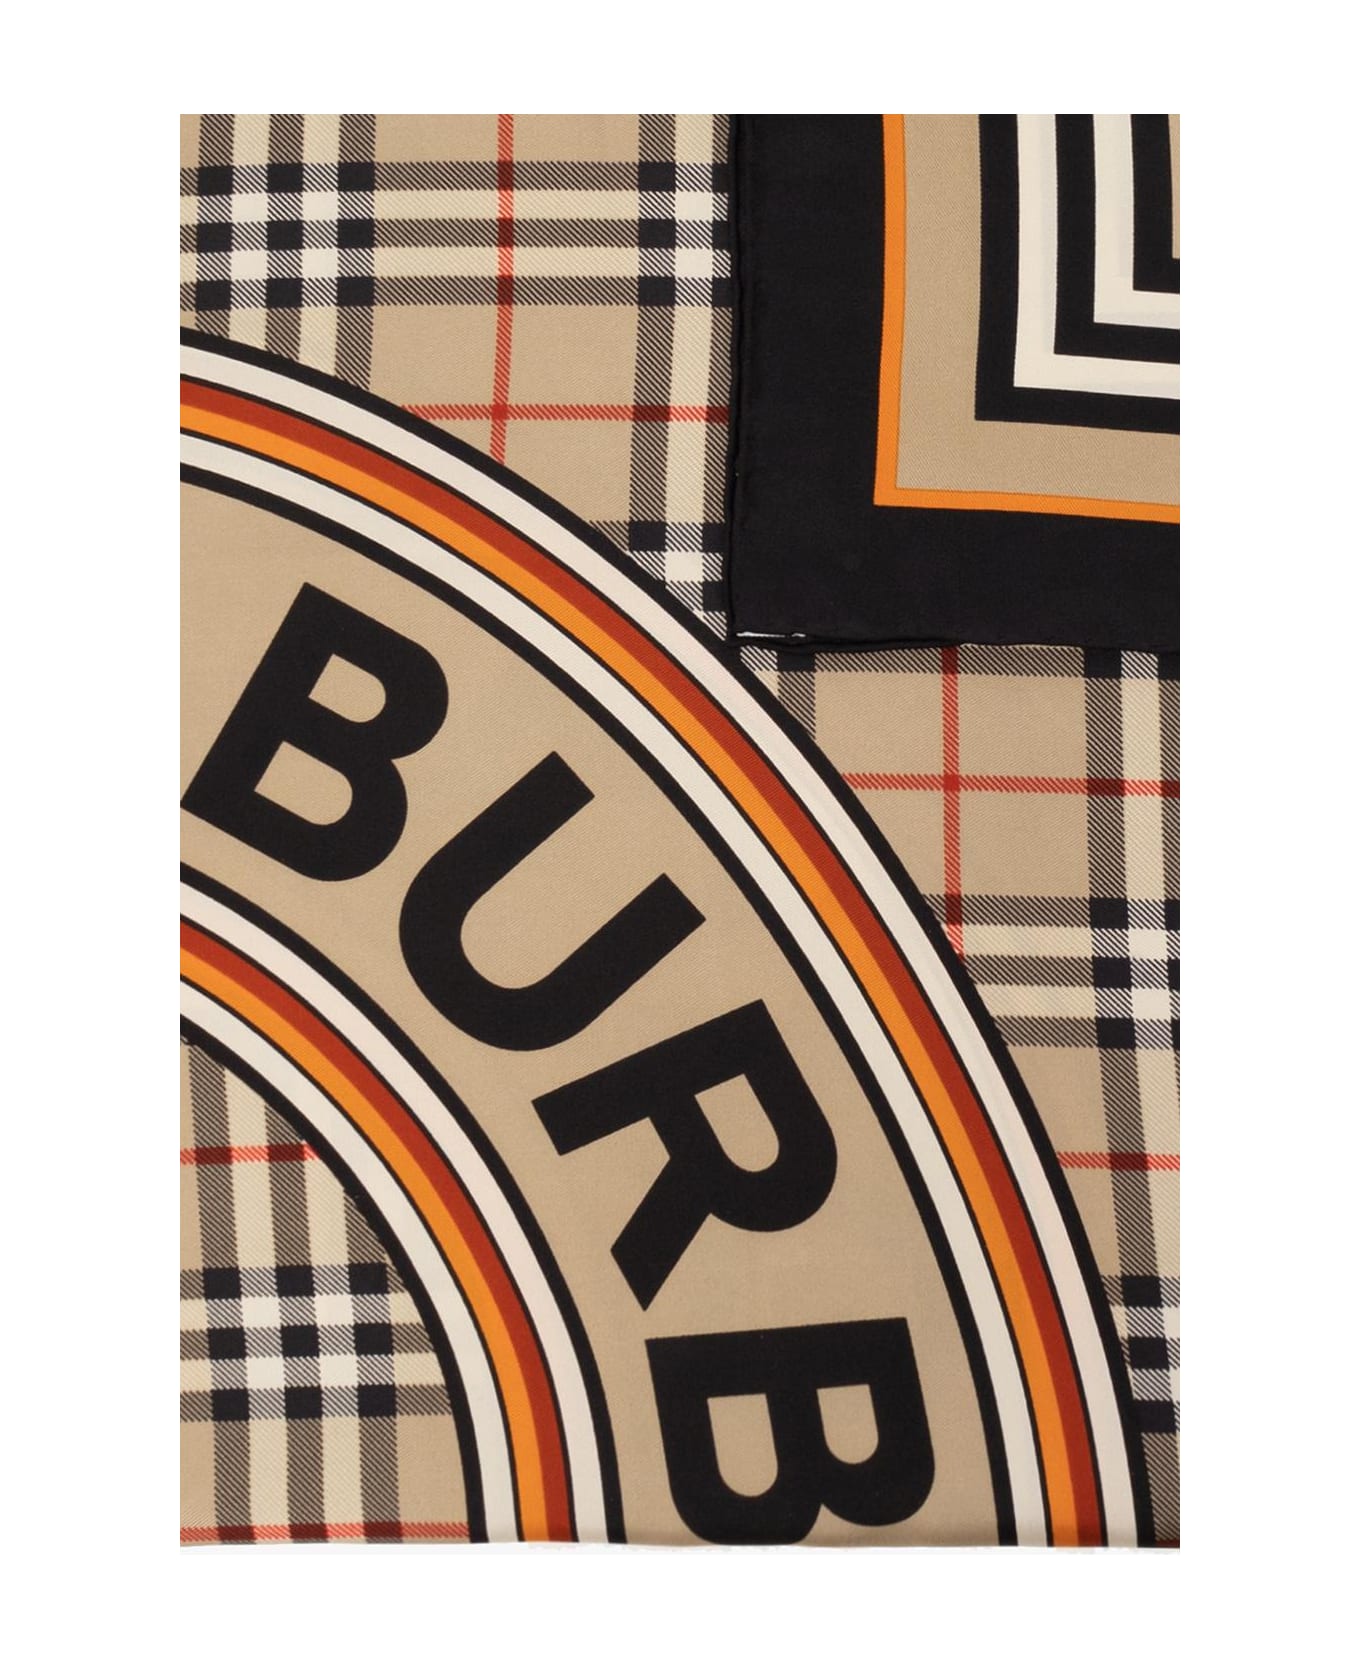 Burberry Scarf - Beige